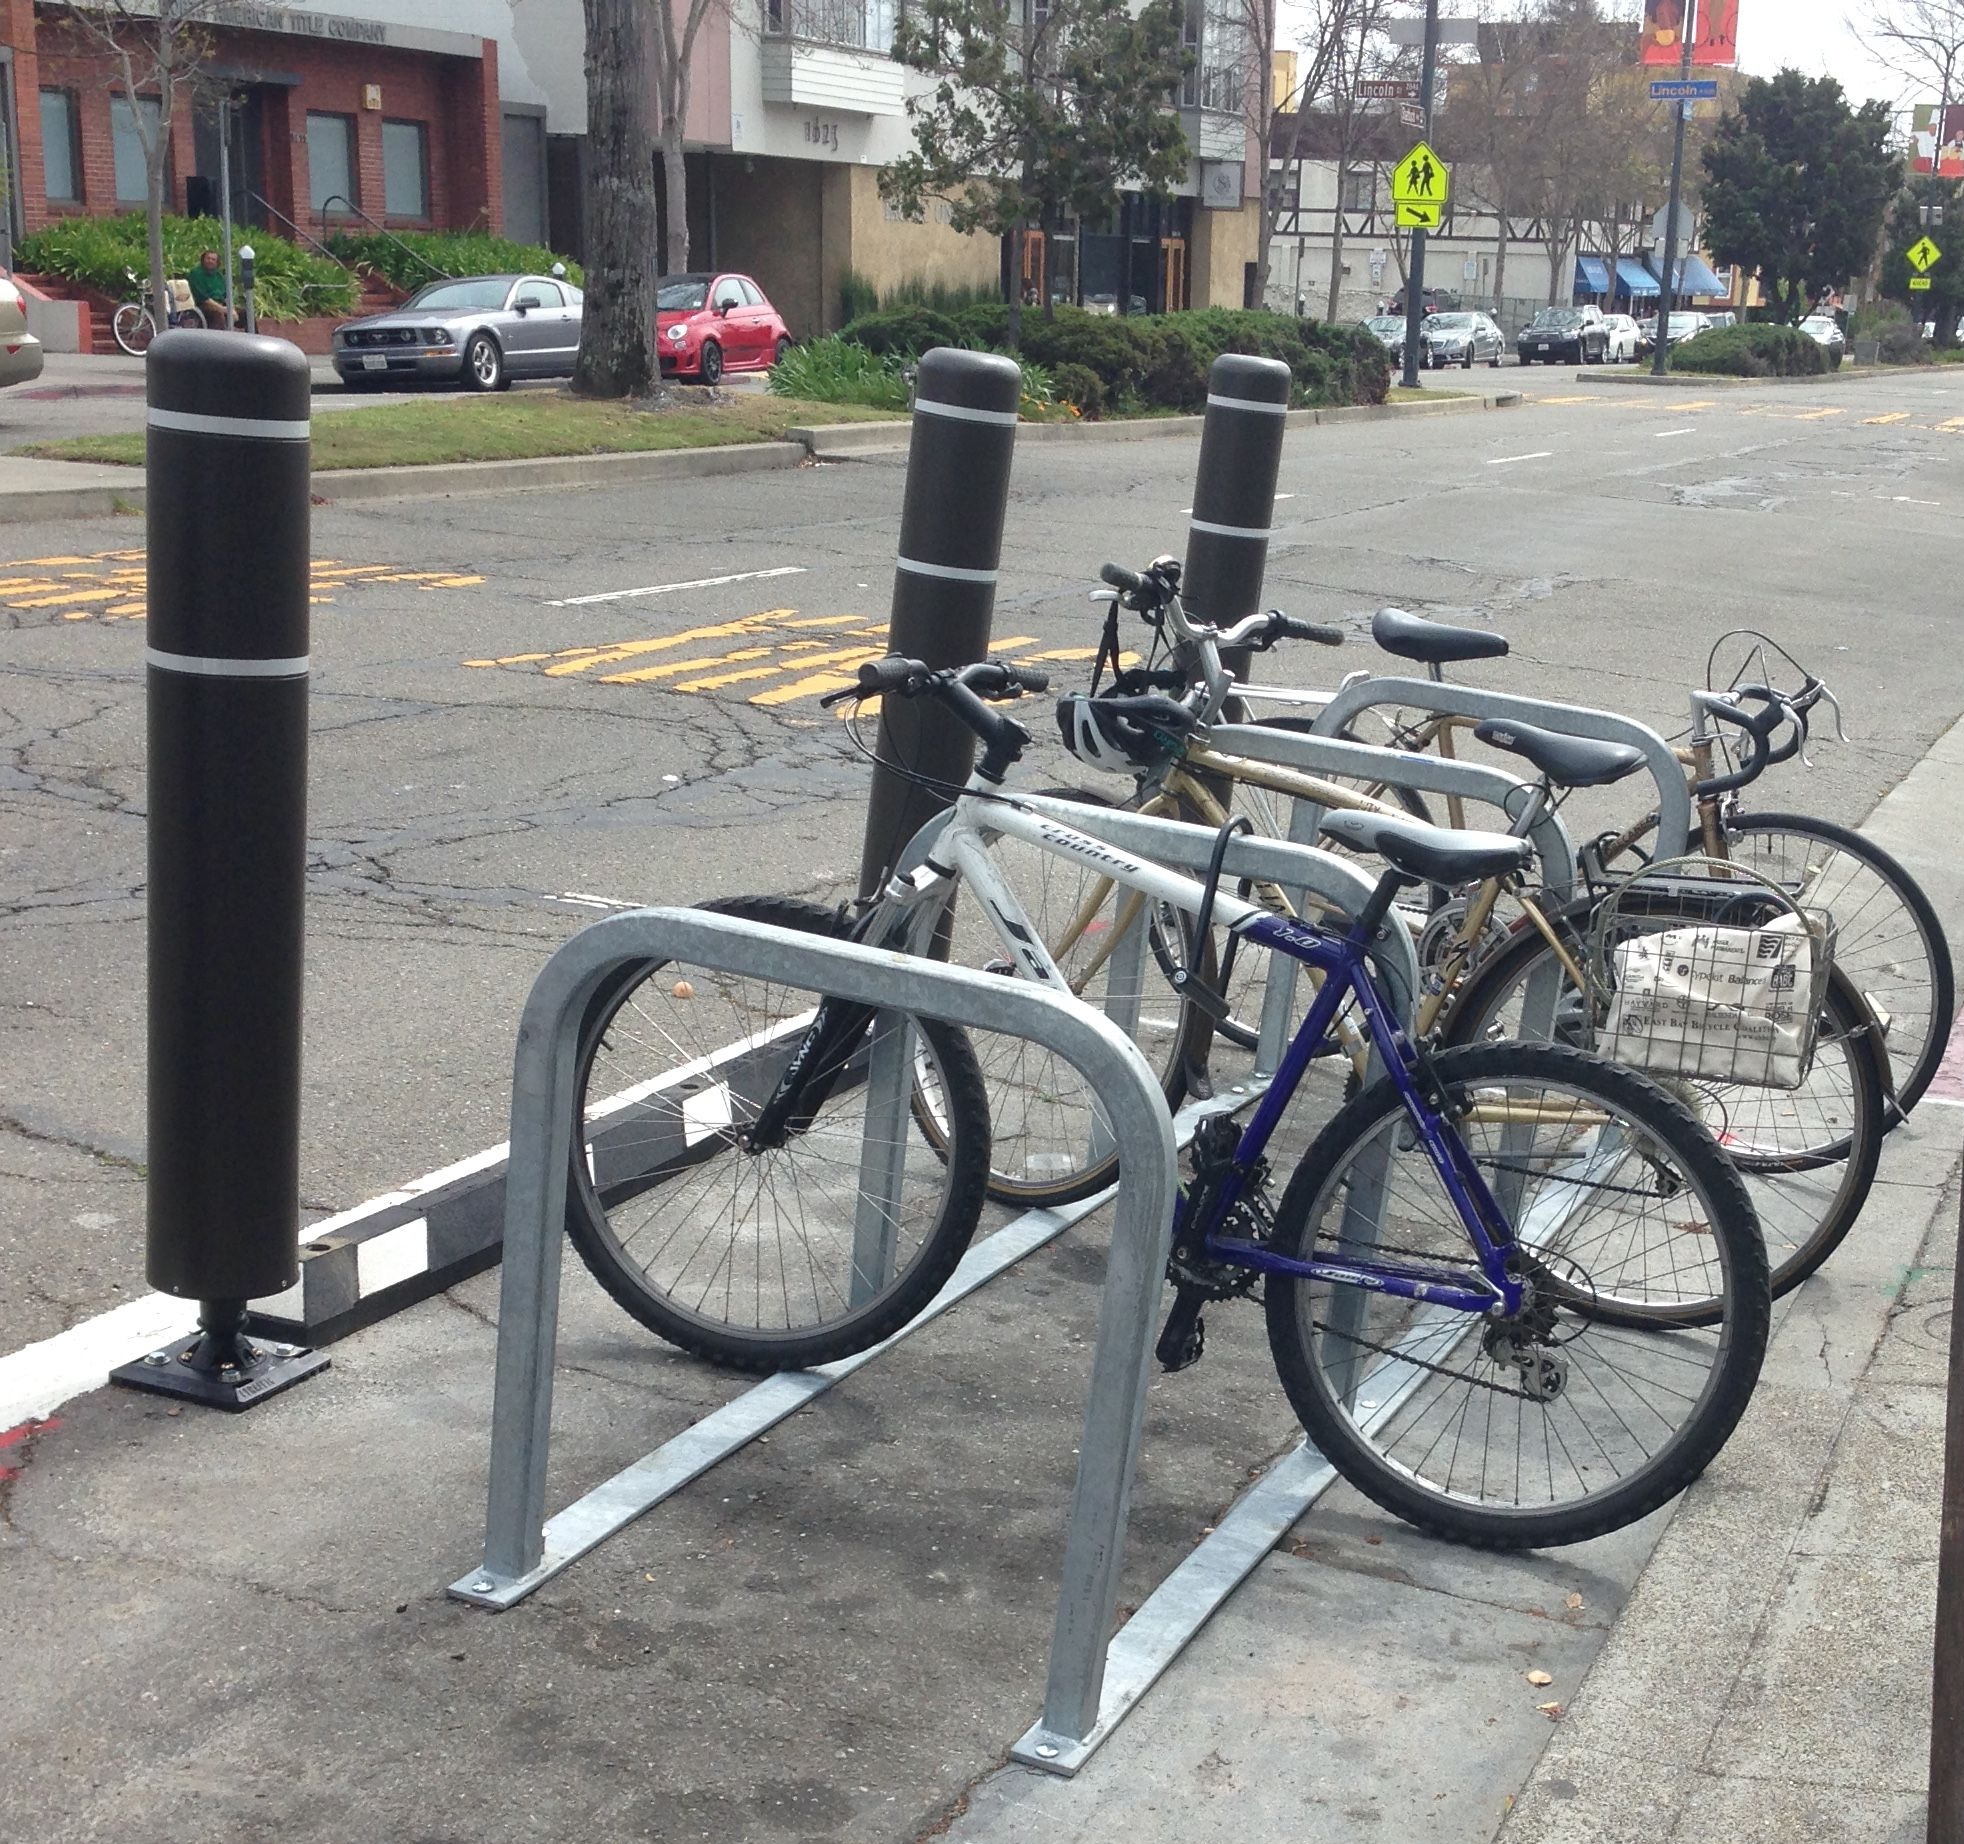 Bicycle Corrals - City of Berkeley, CA